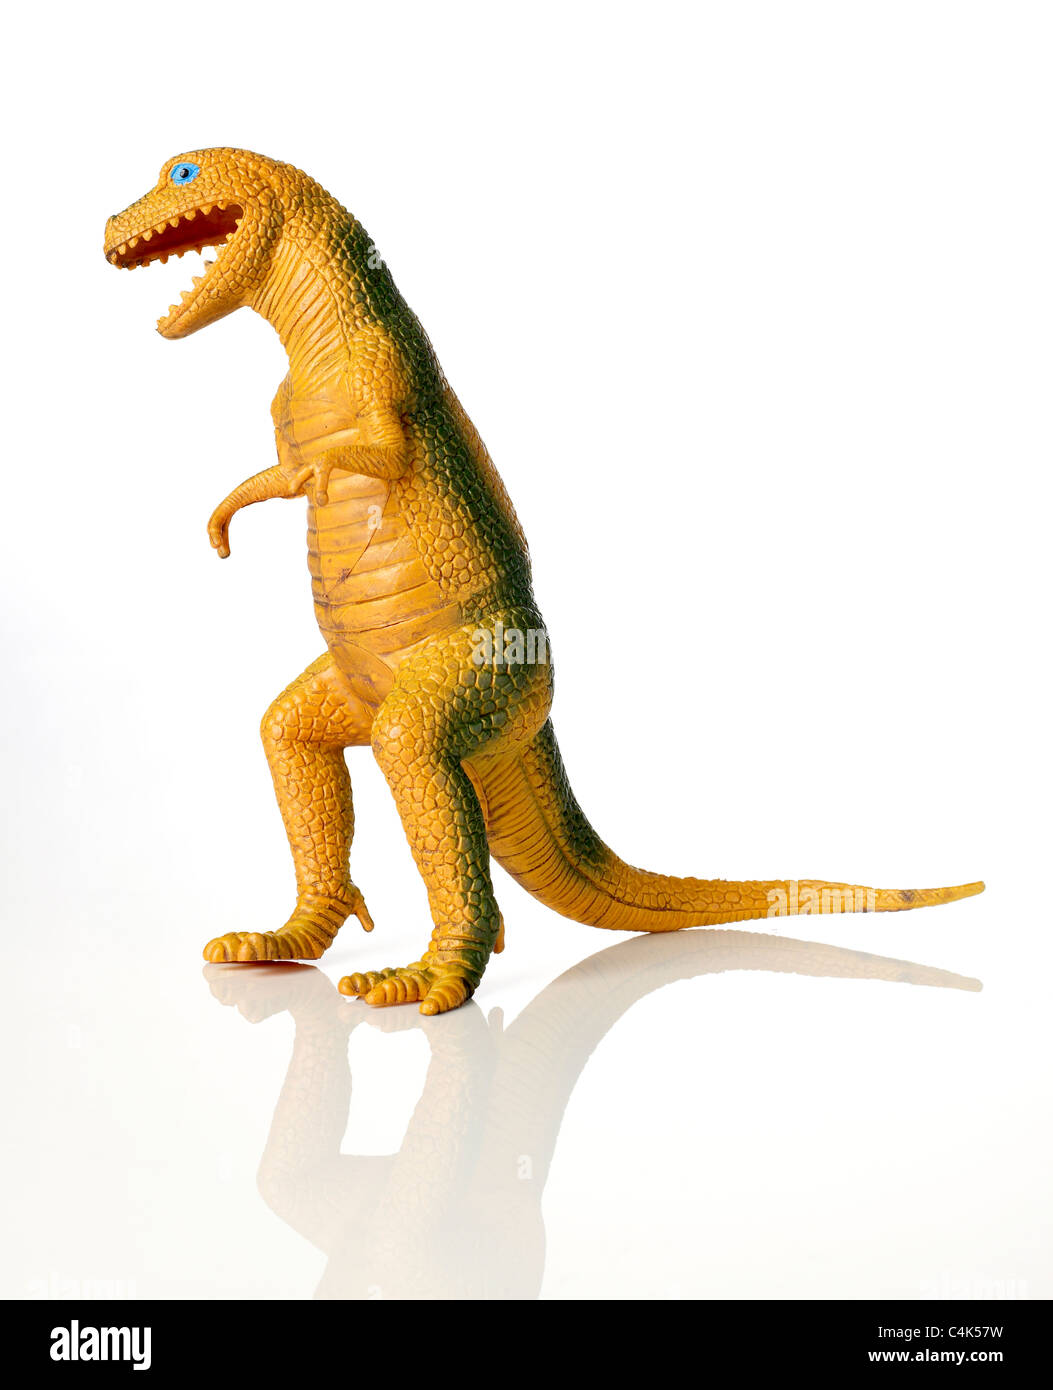 Iconos de dinosaurios fotografías e imágenes de alta resolución - Alamy